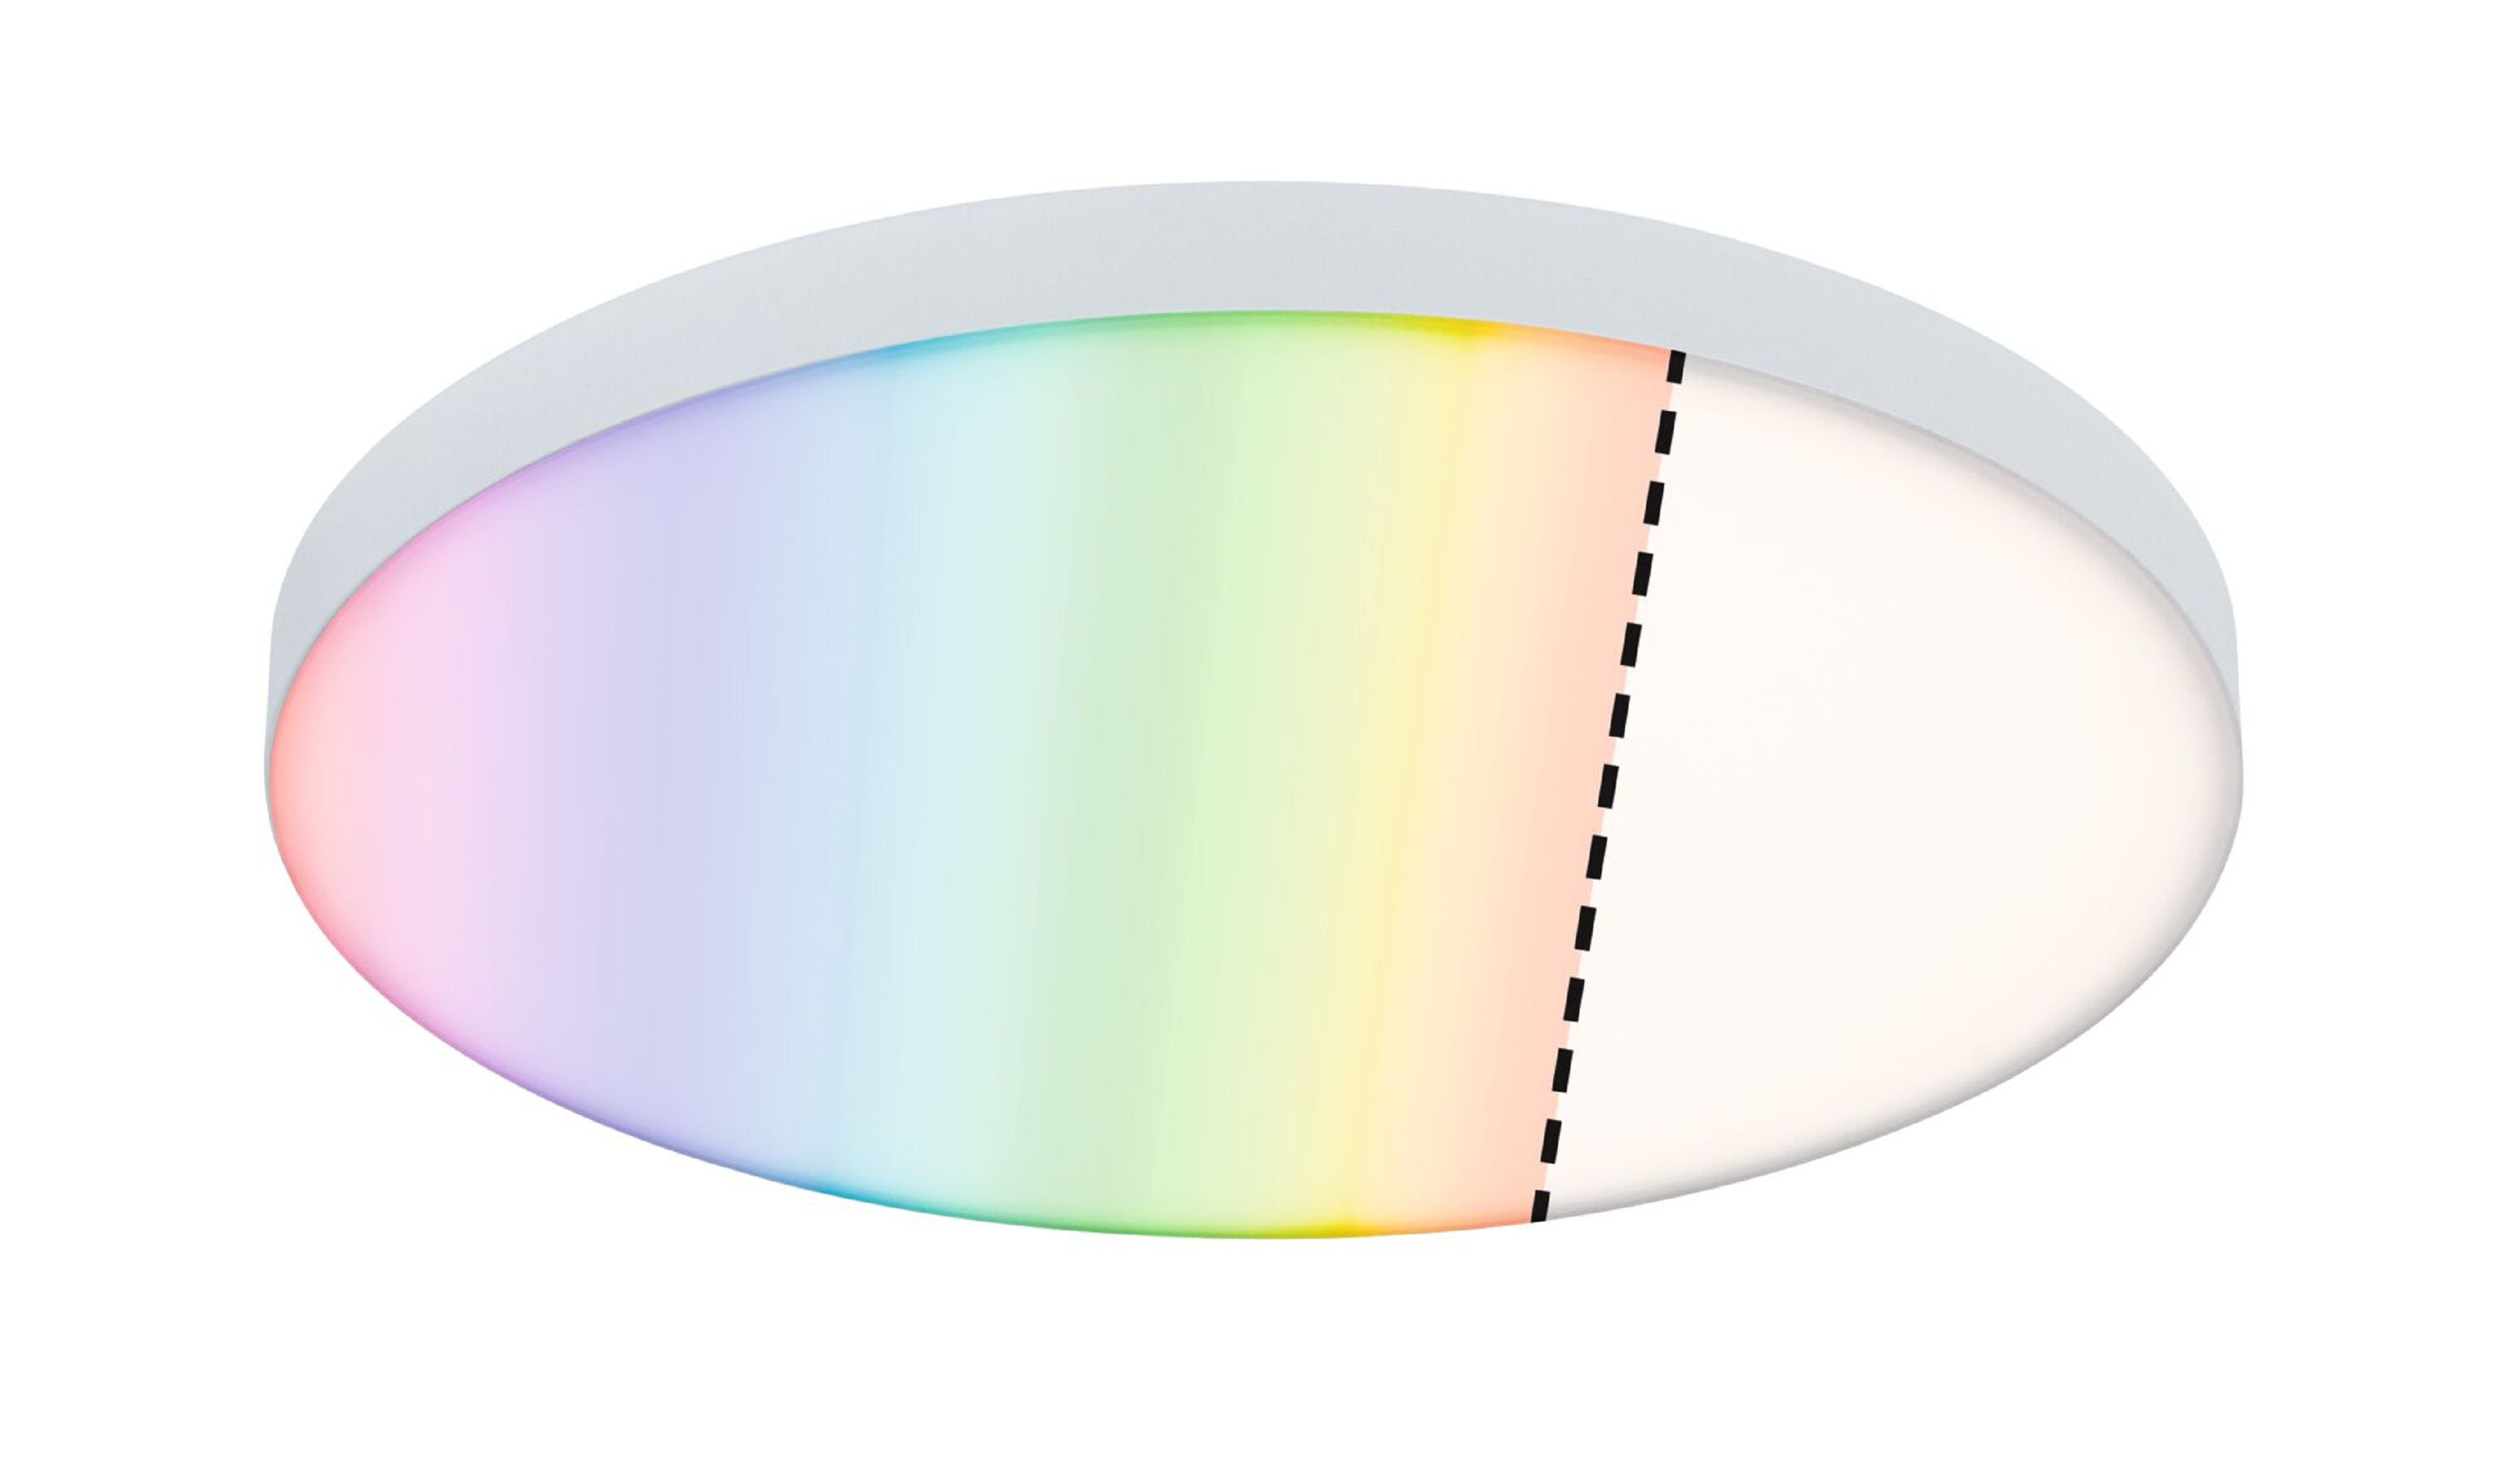 PAULMANN LICHT Velora (79899) Panel RGBW LED Farbwechsel